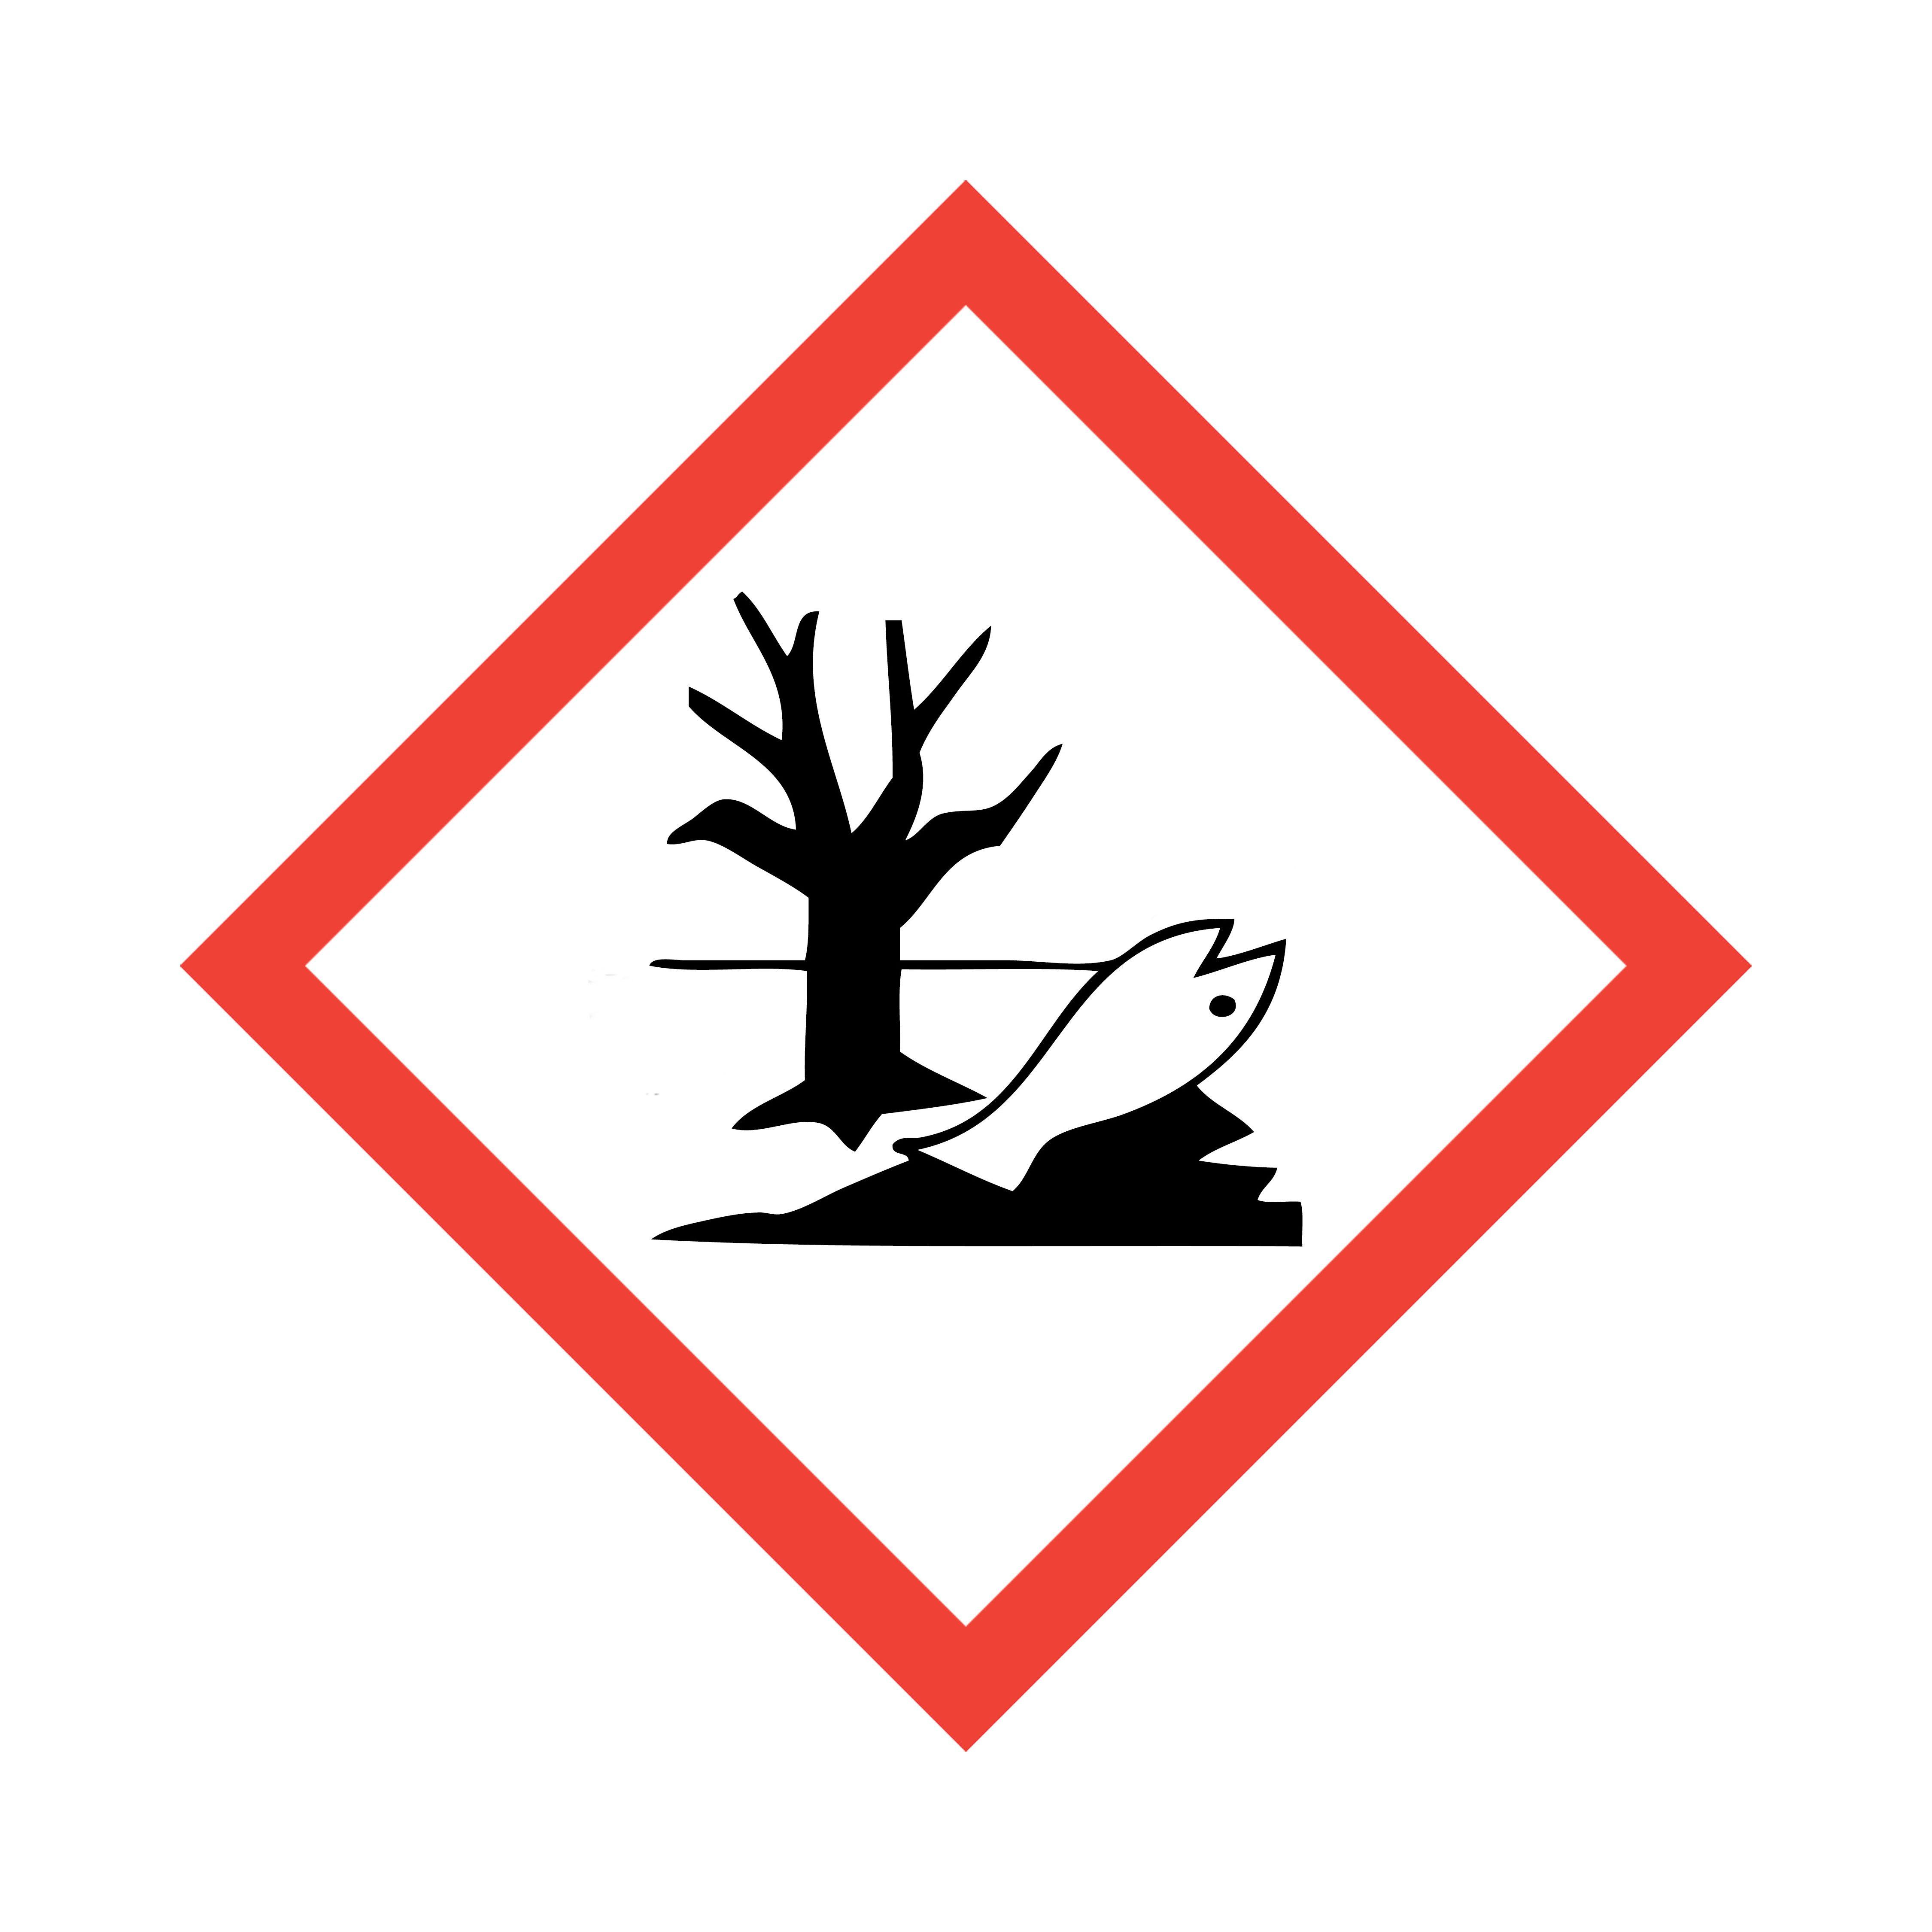 Hazard Logo - Know Your Hazard Symbols (Pictograms). Office of Environmental